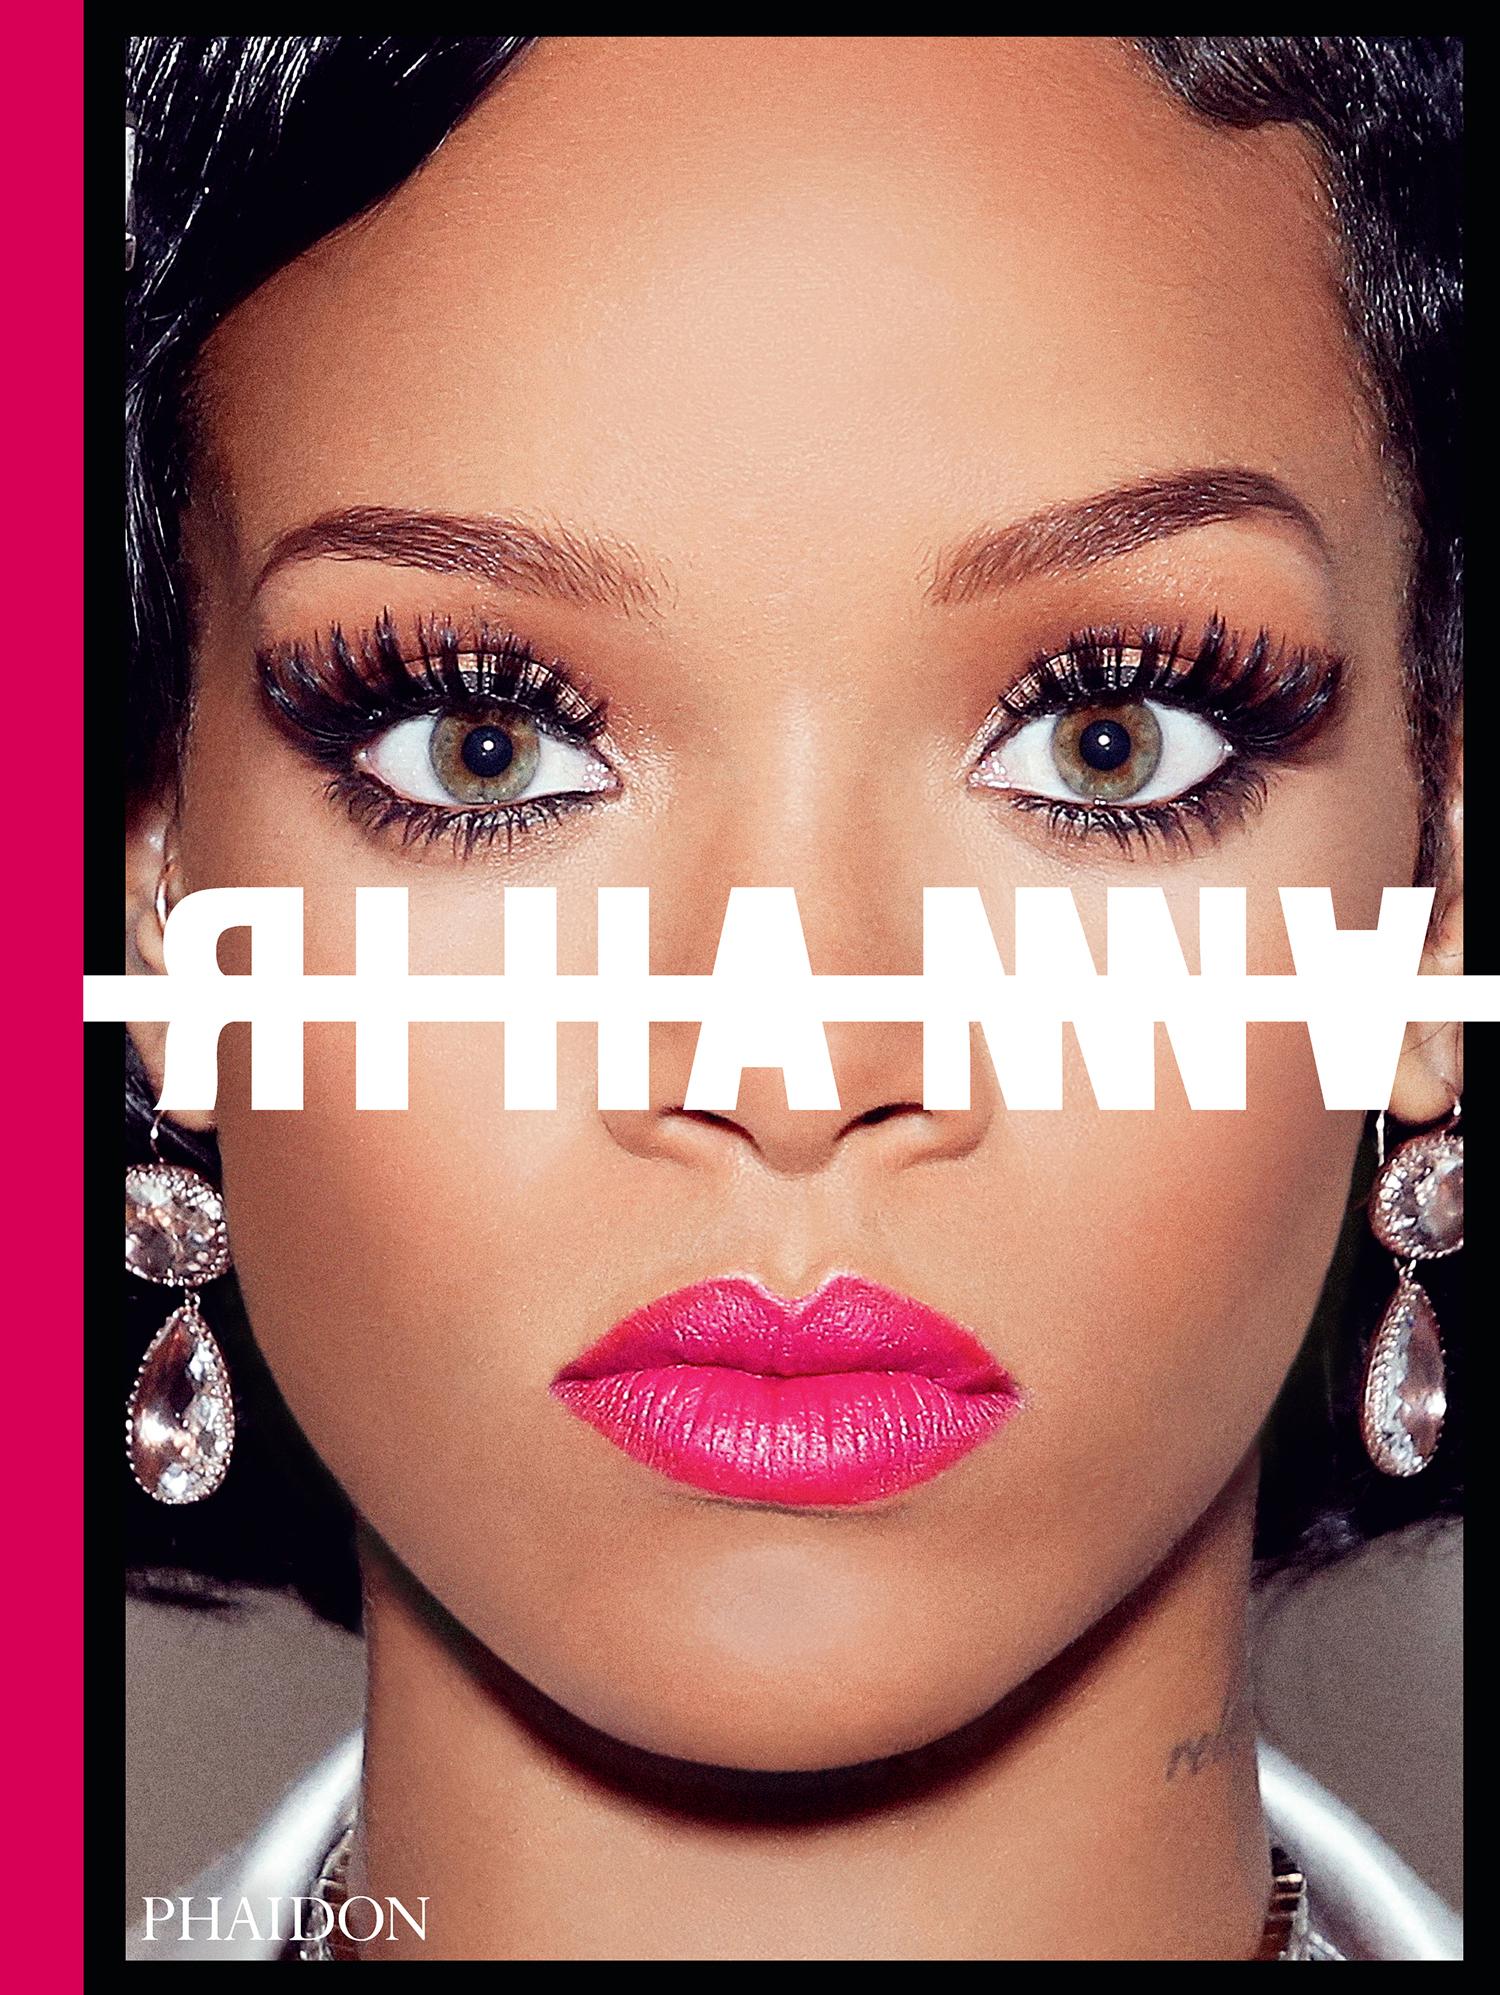 Le livre de Rihanna en vente 7